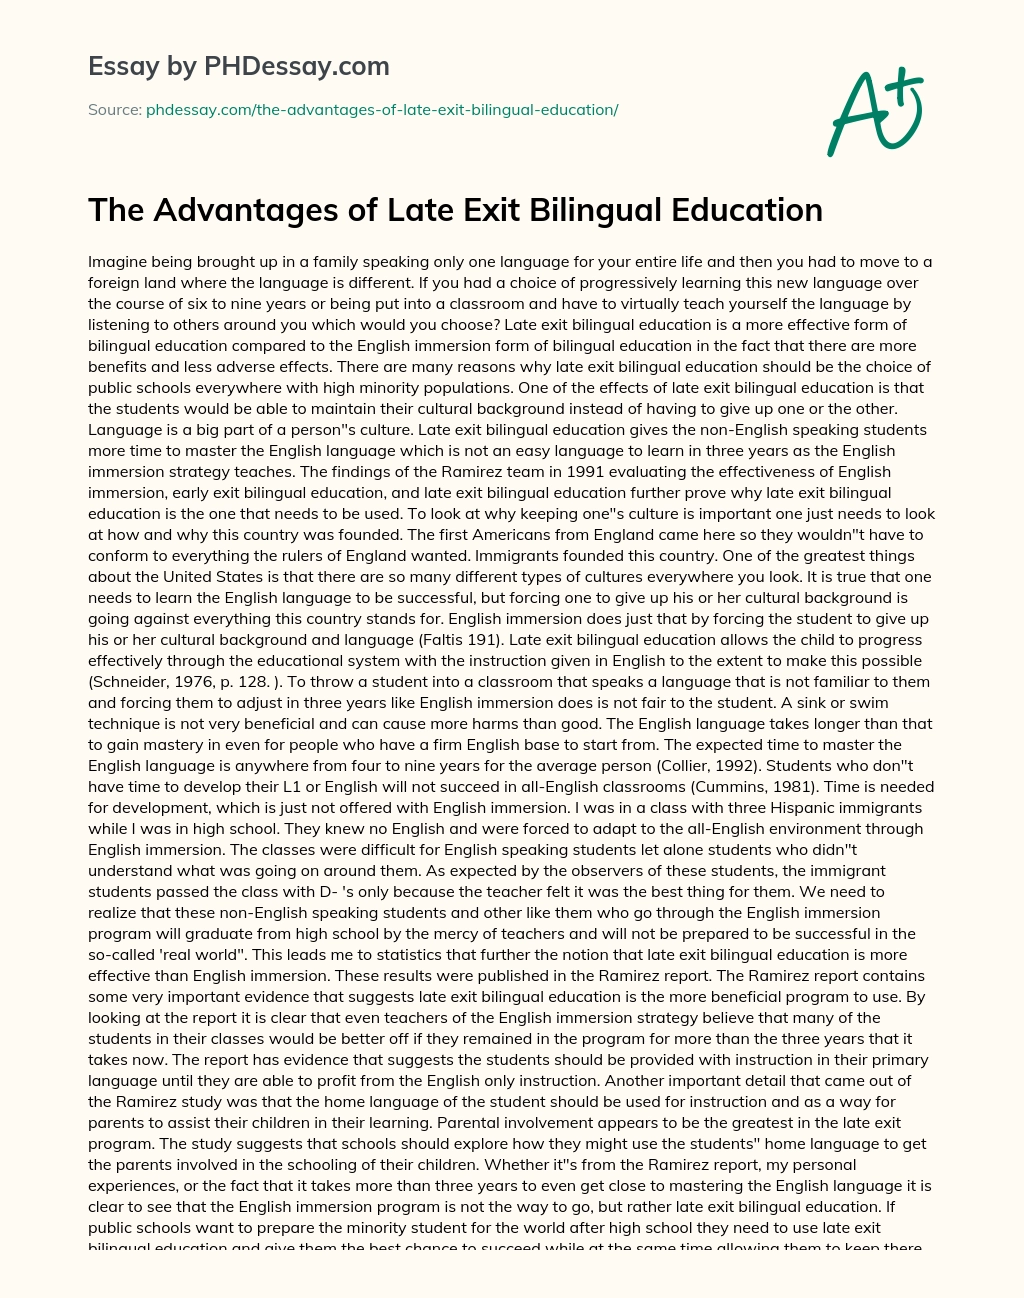 The Advantages of Late Exit Bilingual Education essay